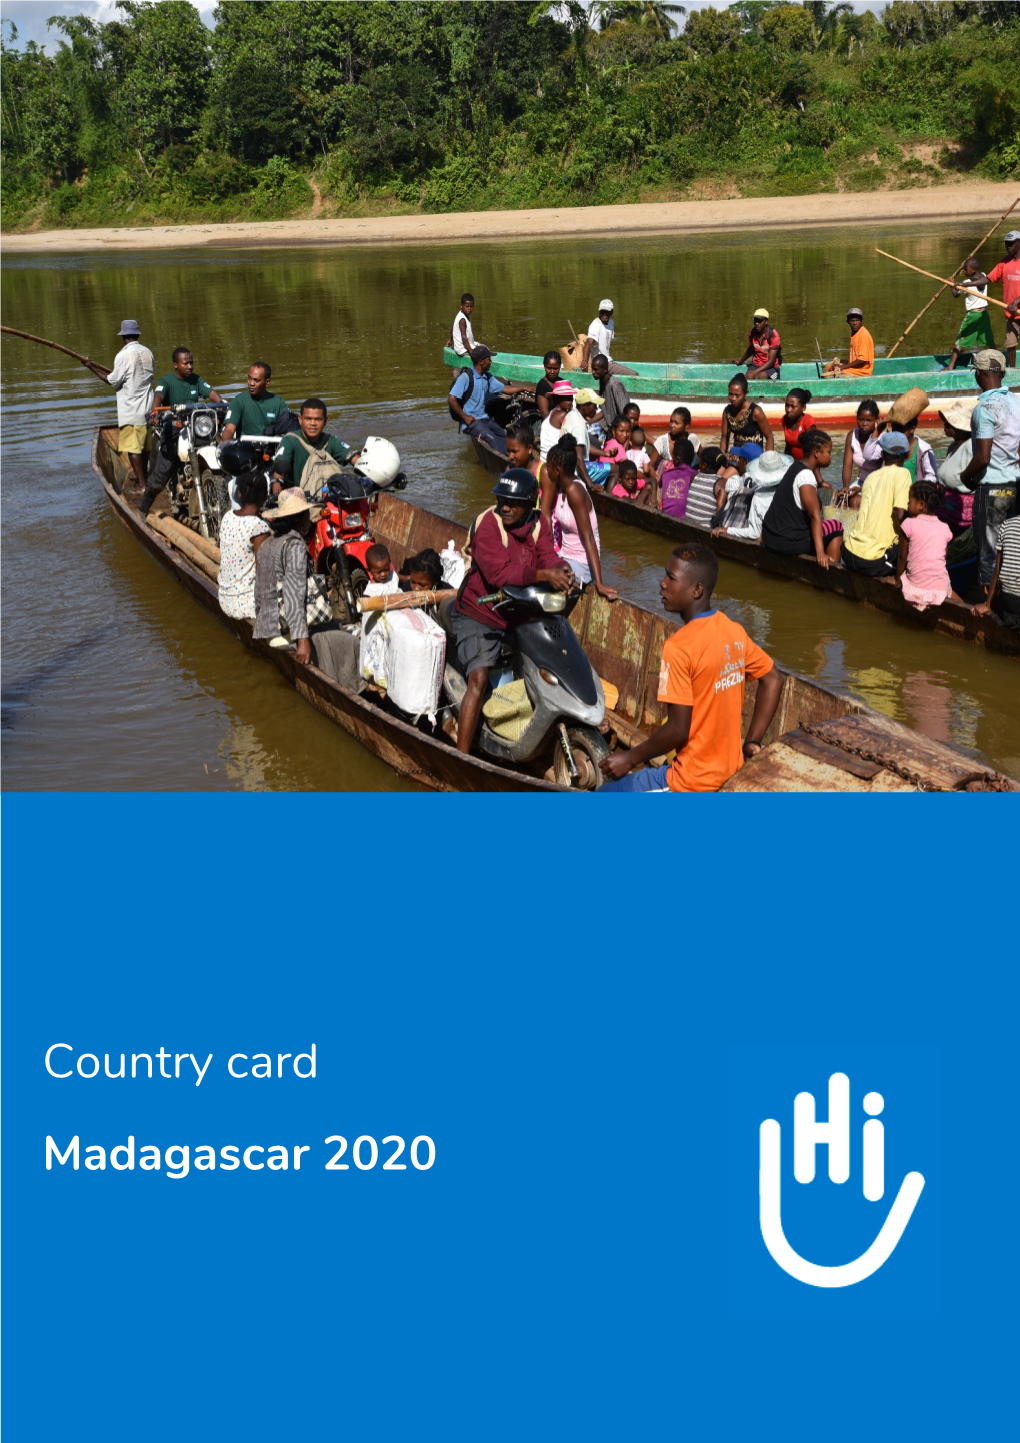 Country Card Madagascar 2020